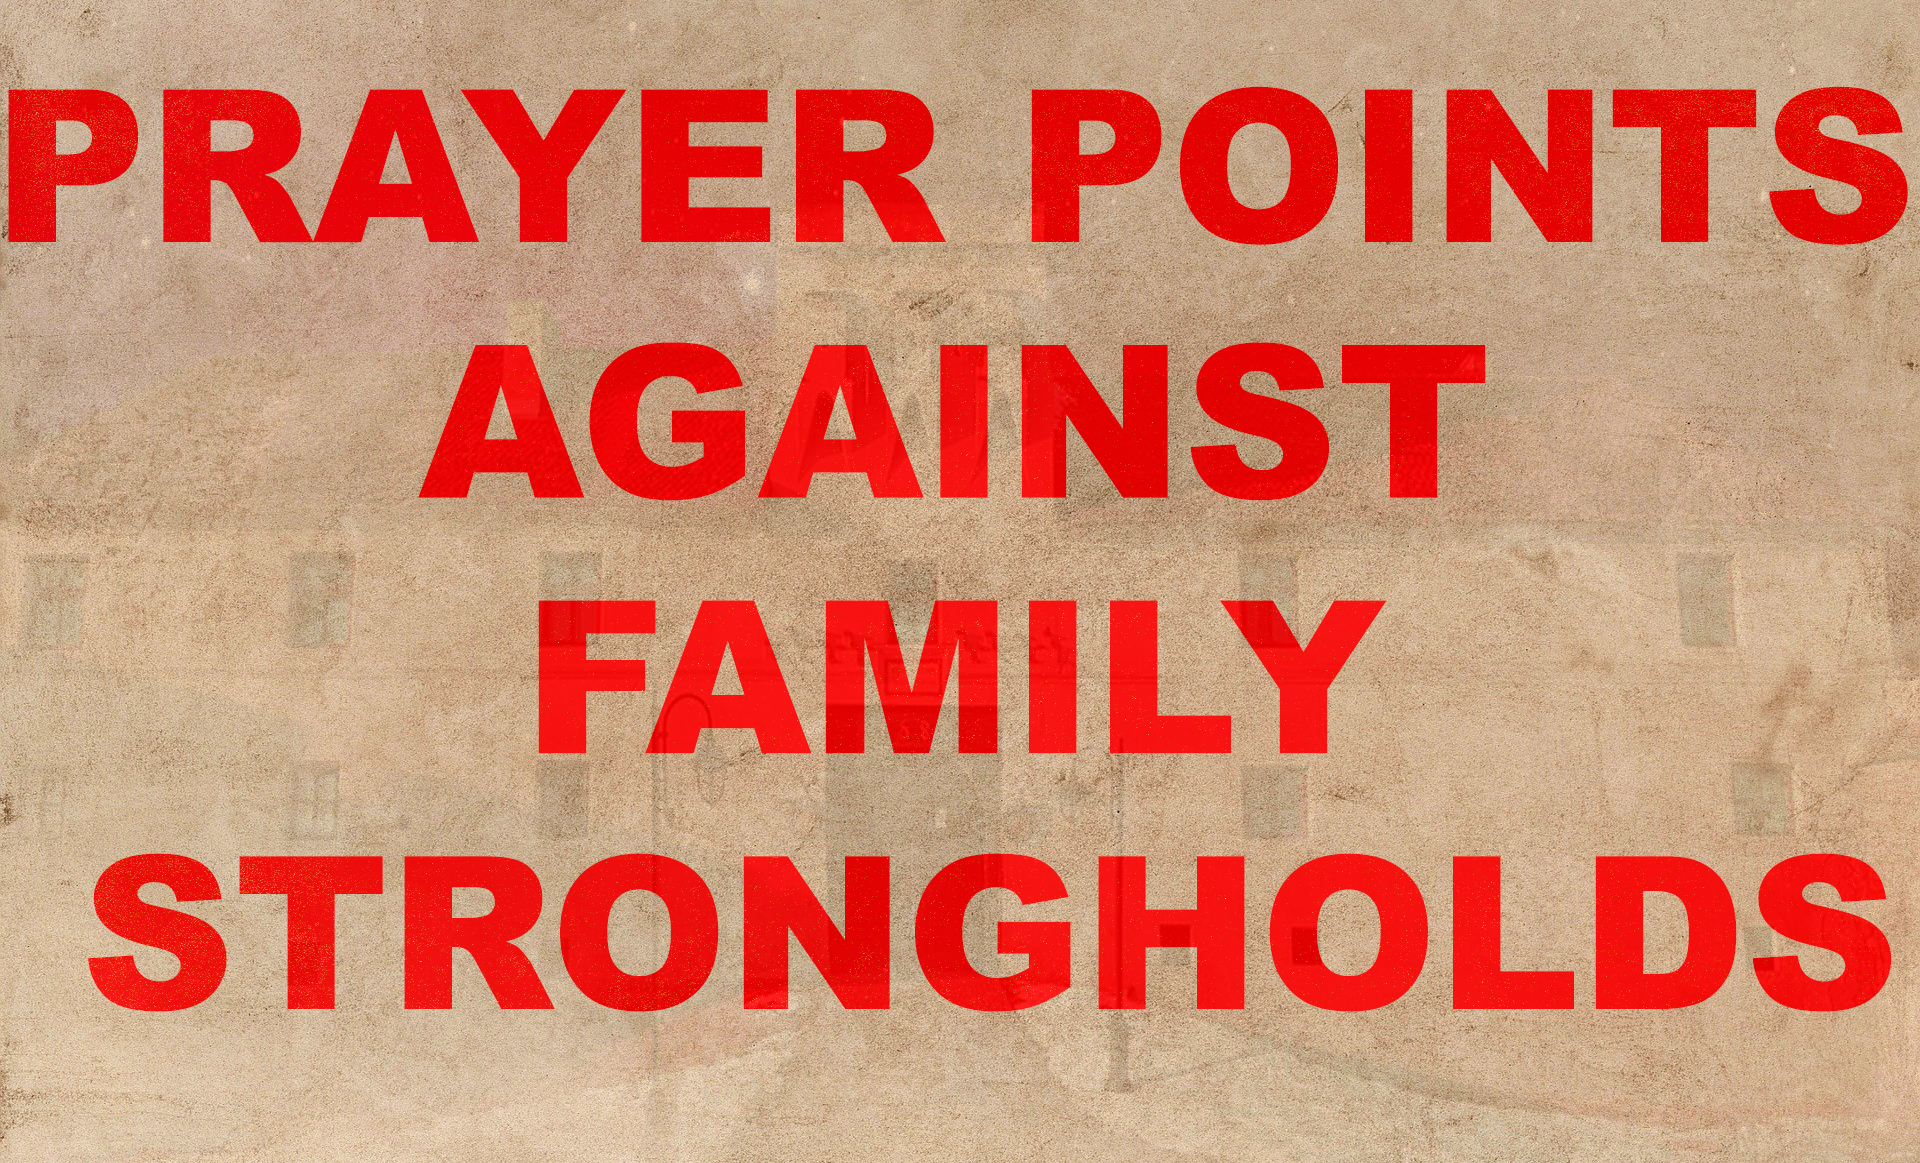 Prayer Points Against Family Strongholds